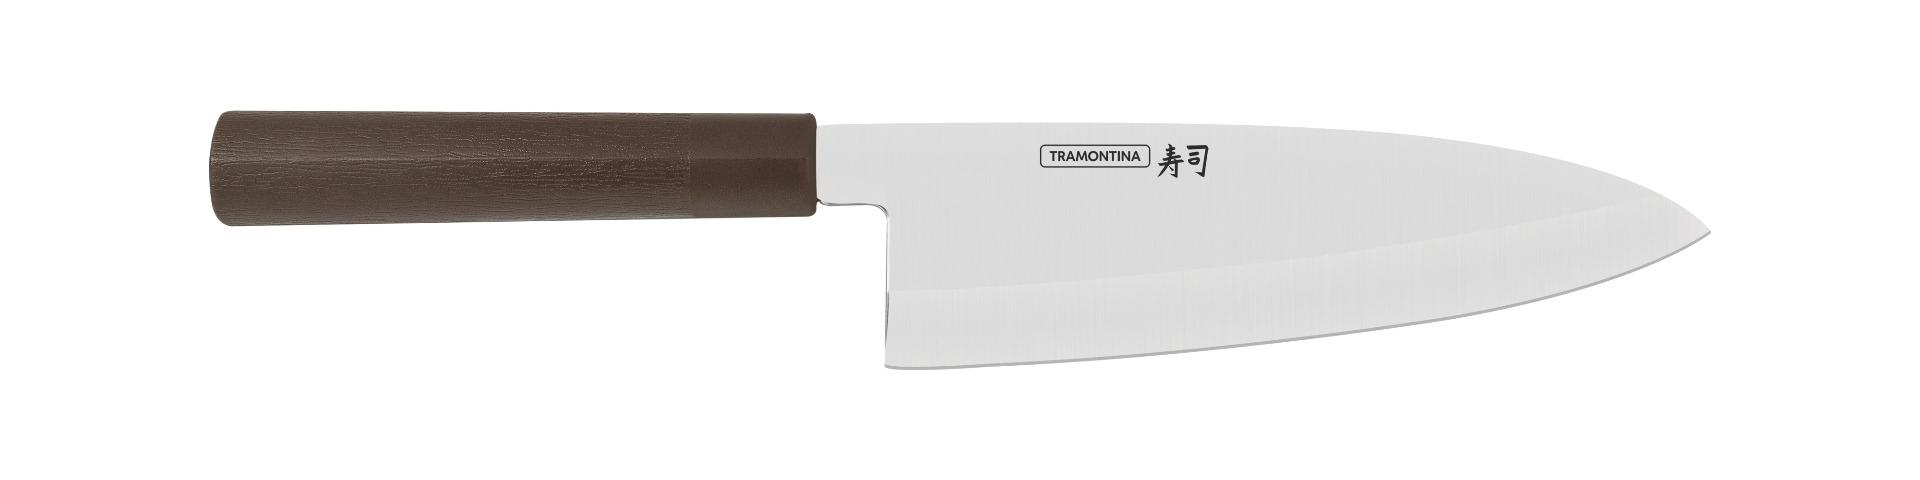 سكين سوشي 8 انش تارمونتينا ديبا Tramontina Deba Sushi Knife